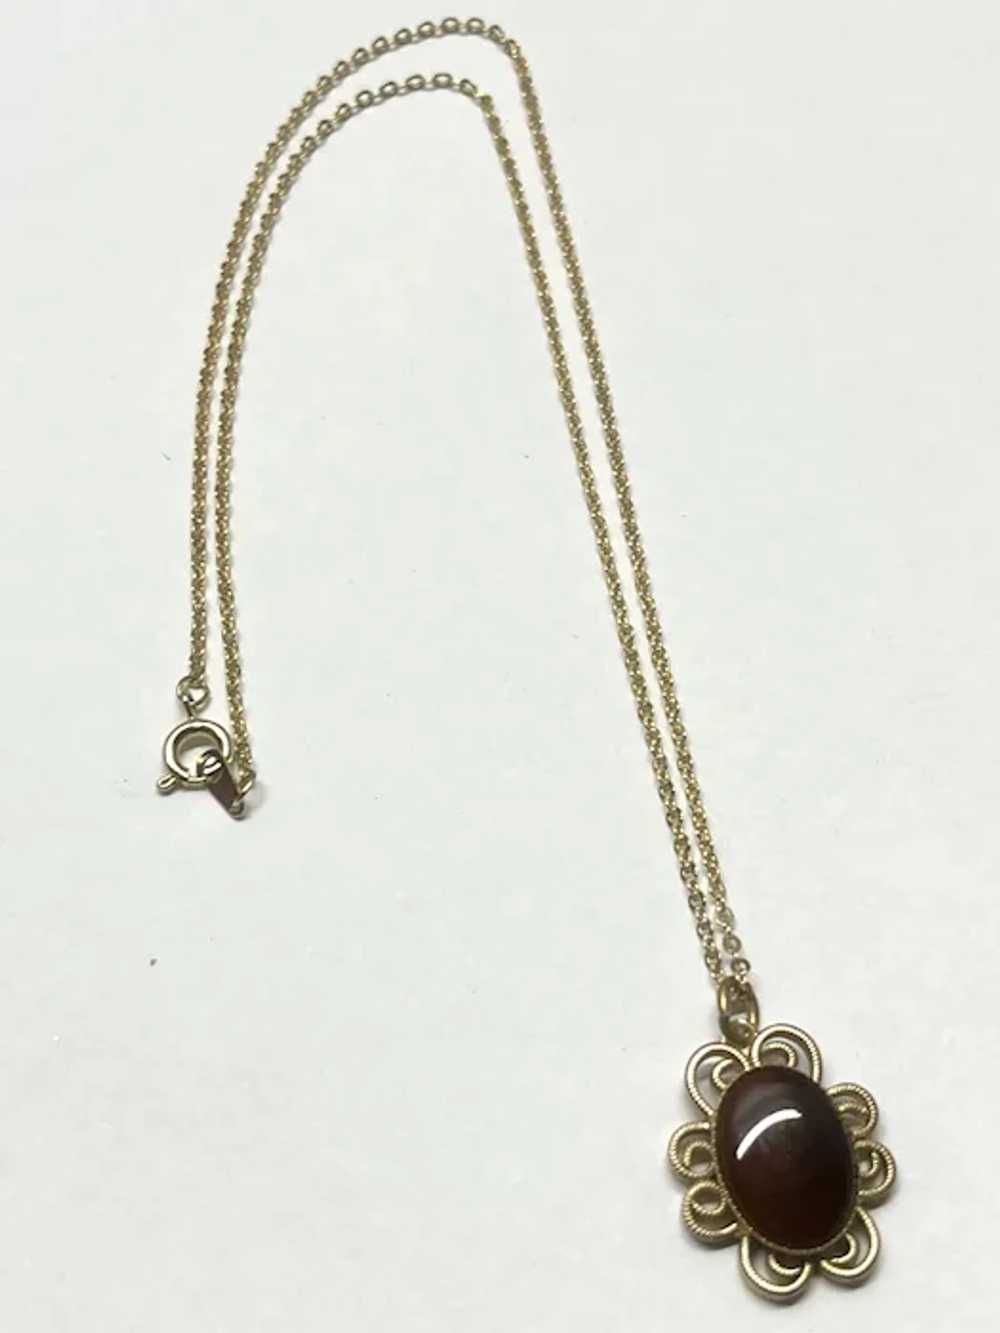 Vintage stone flower pendant charm necklace - image 2